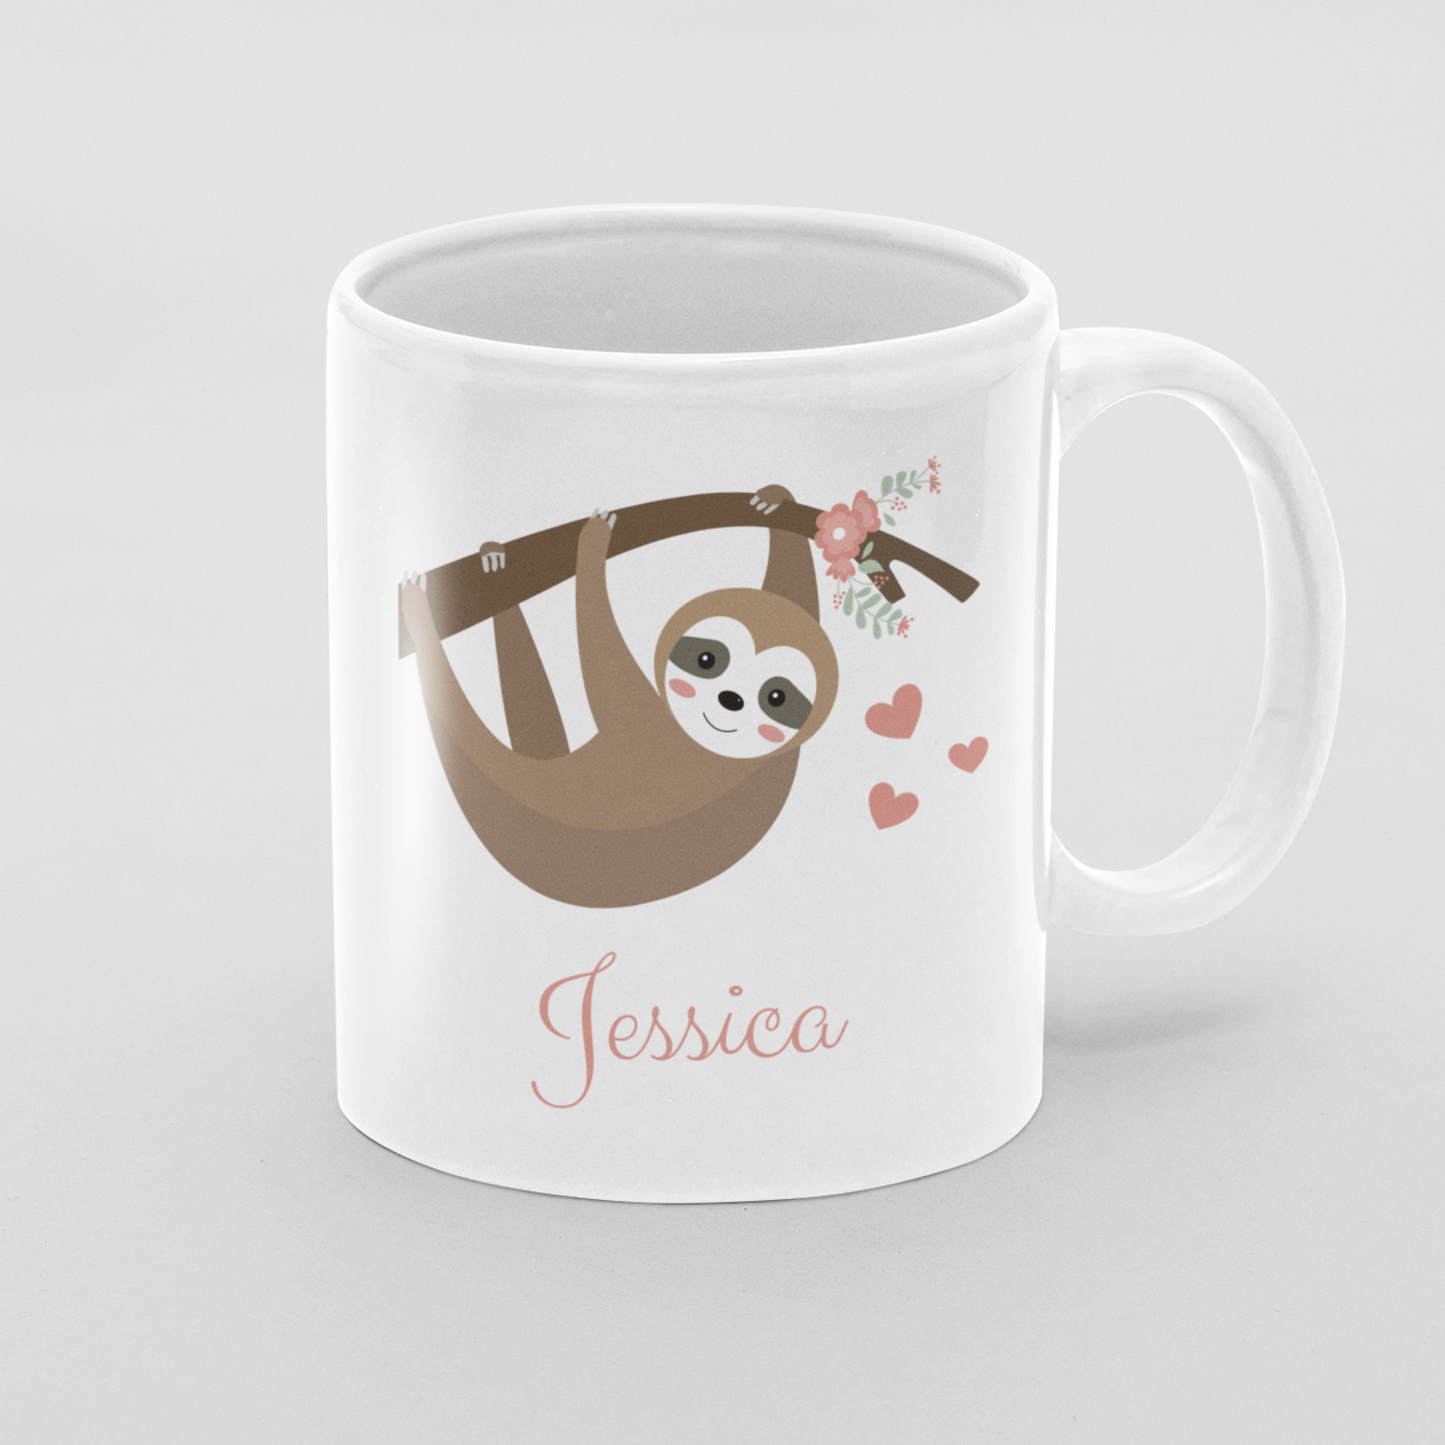 Custom-Printed Sloth Mug with Pink Hearts & Flowers